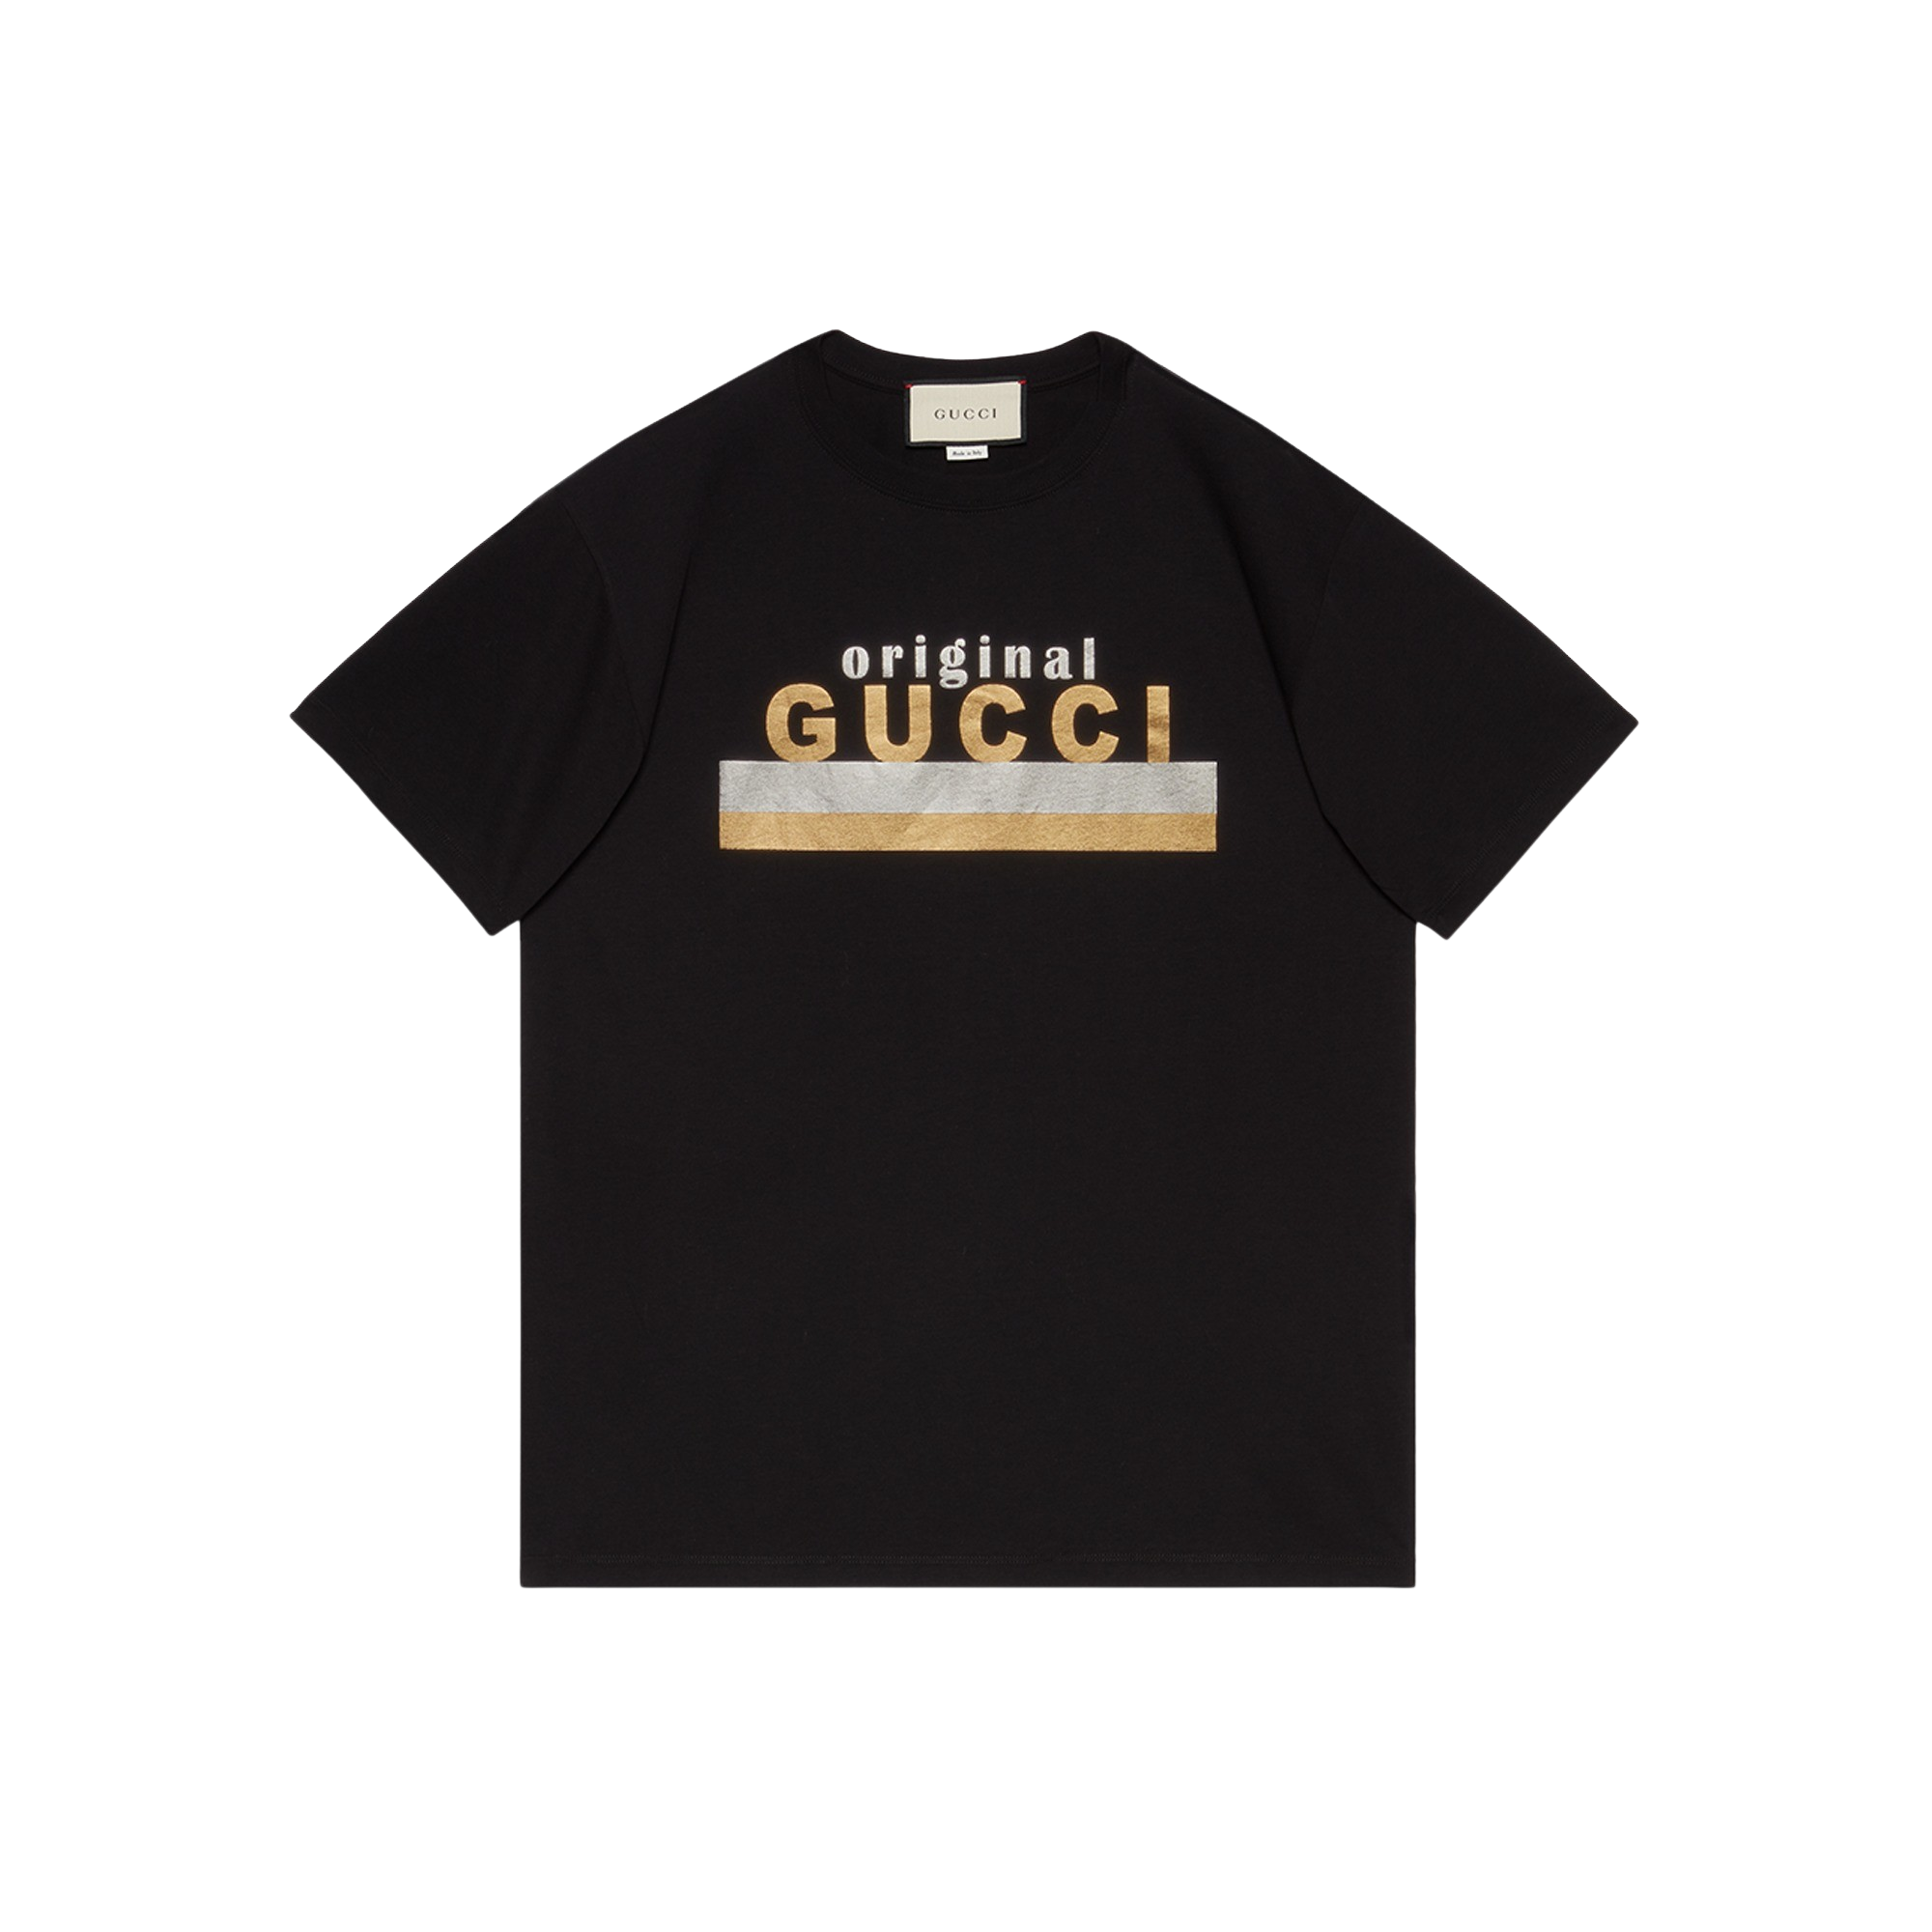 Gucci Gucci logo t-shirt